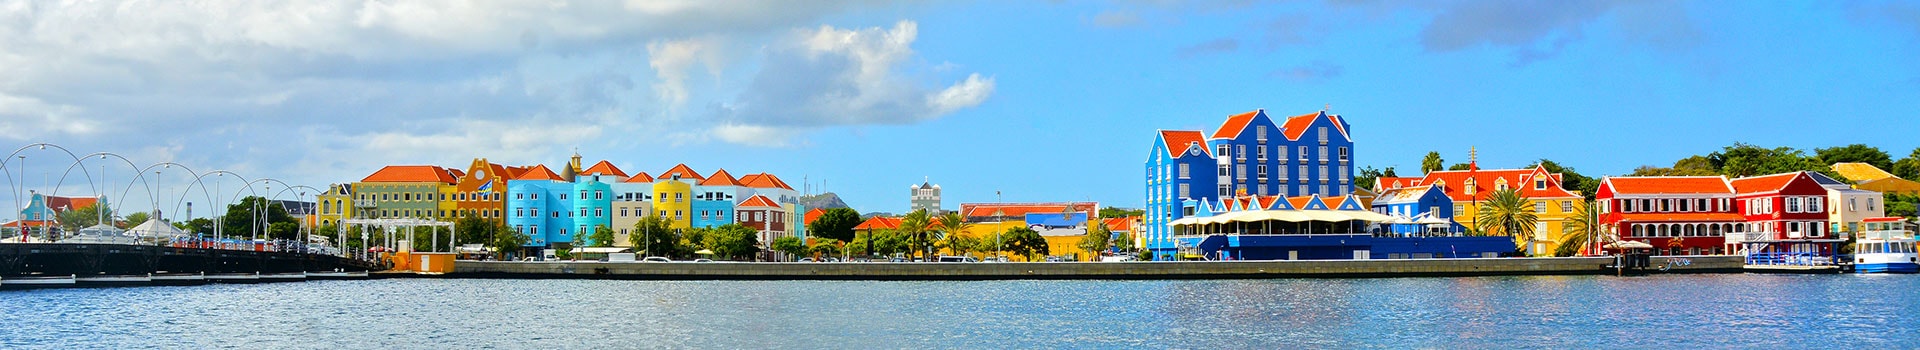 Porto - Willemstad